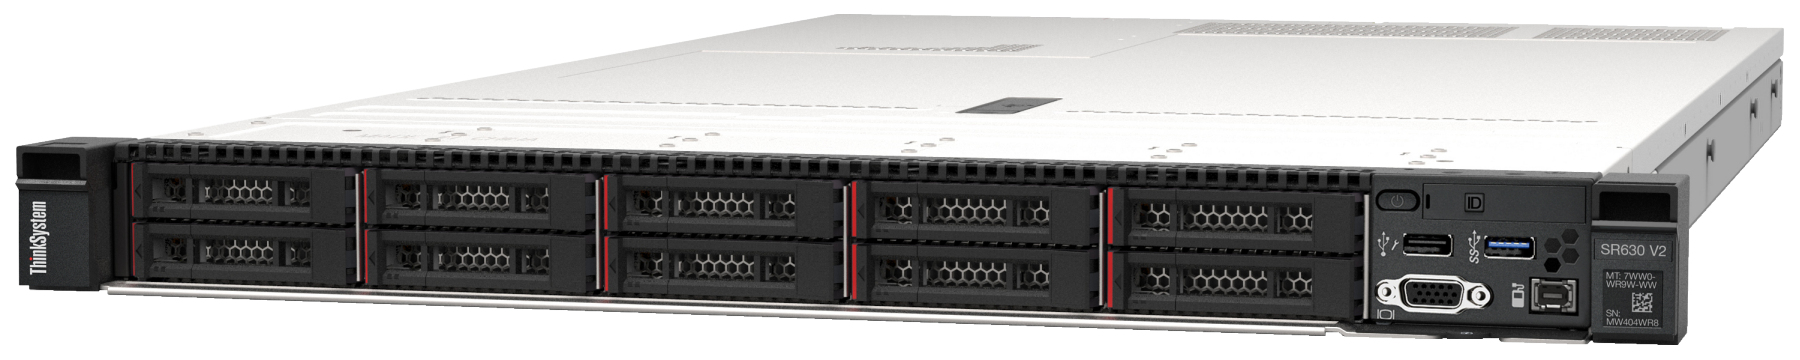 Сервер Lenovo SR630 V2, 1 x Intel Xeon Silver 4310, 1 x 32Gb, RAM